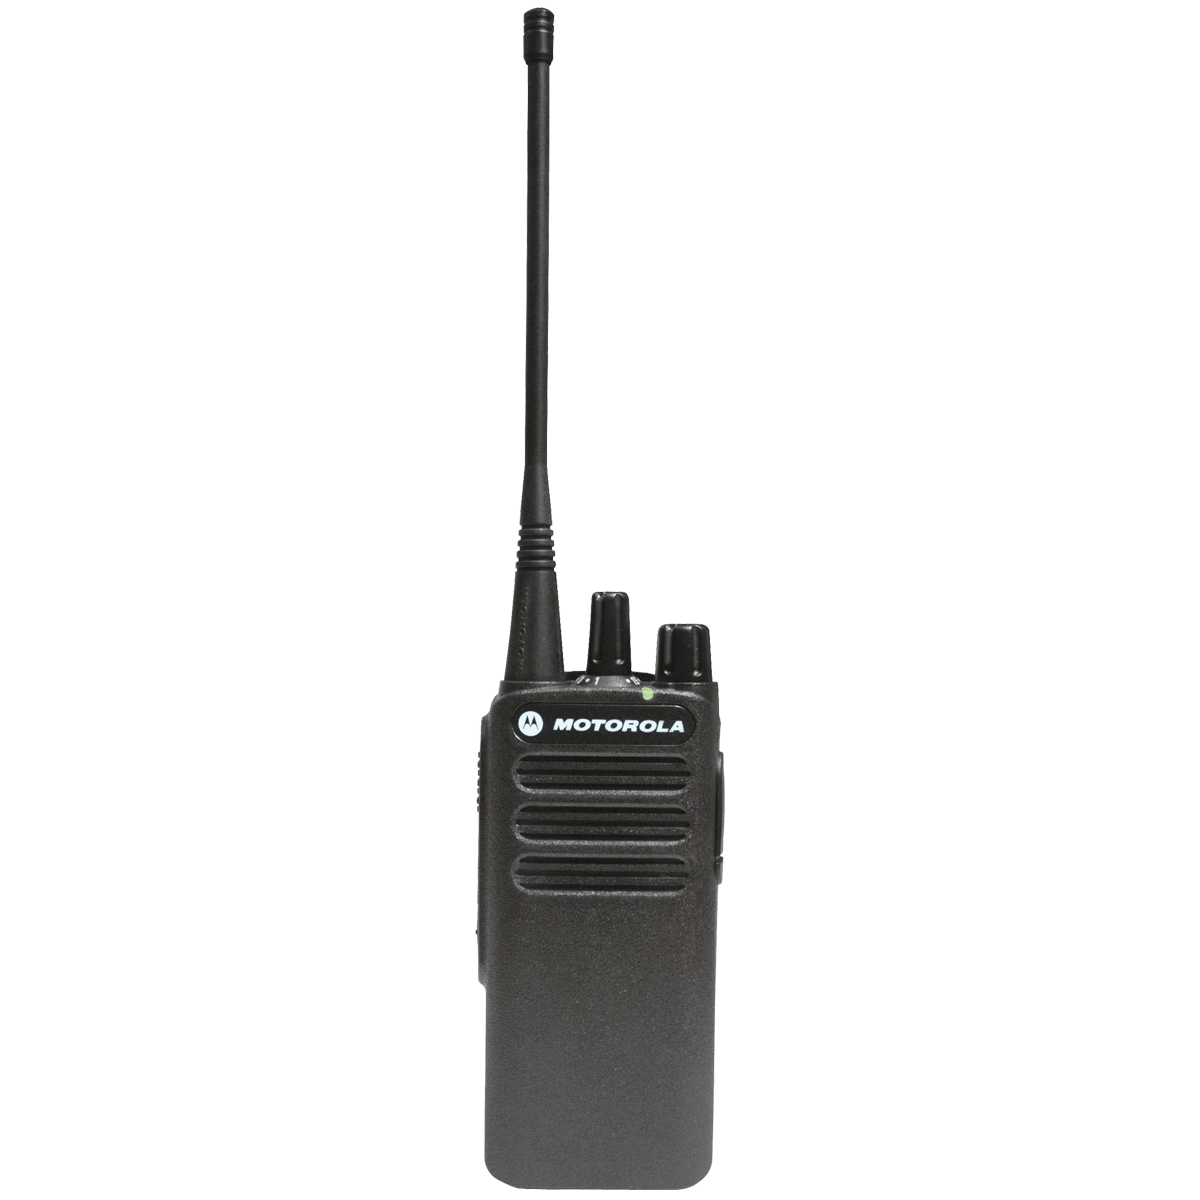 RADIO PORTÁTIL DIGITAL-LAH87YDC9JA2AN - Sistemas Federal